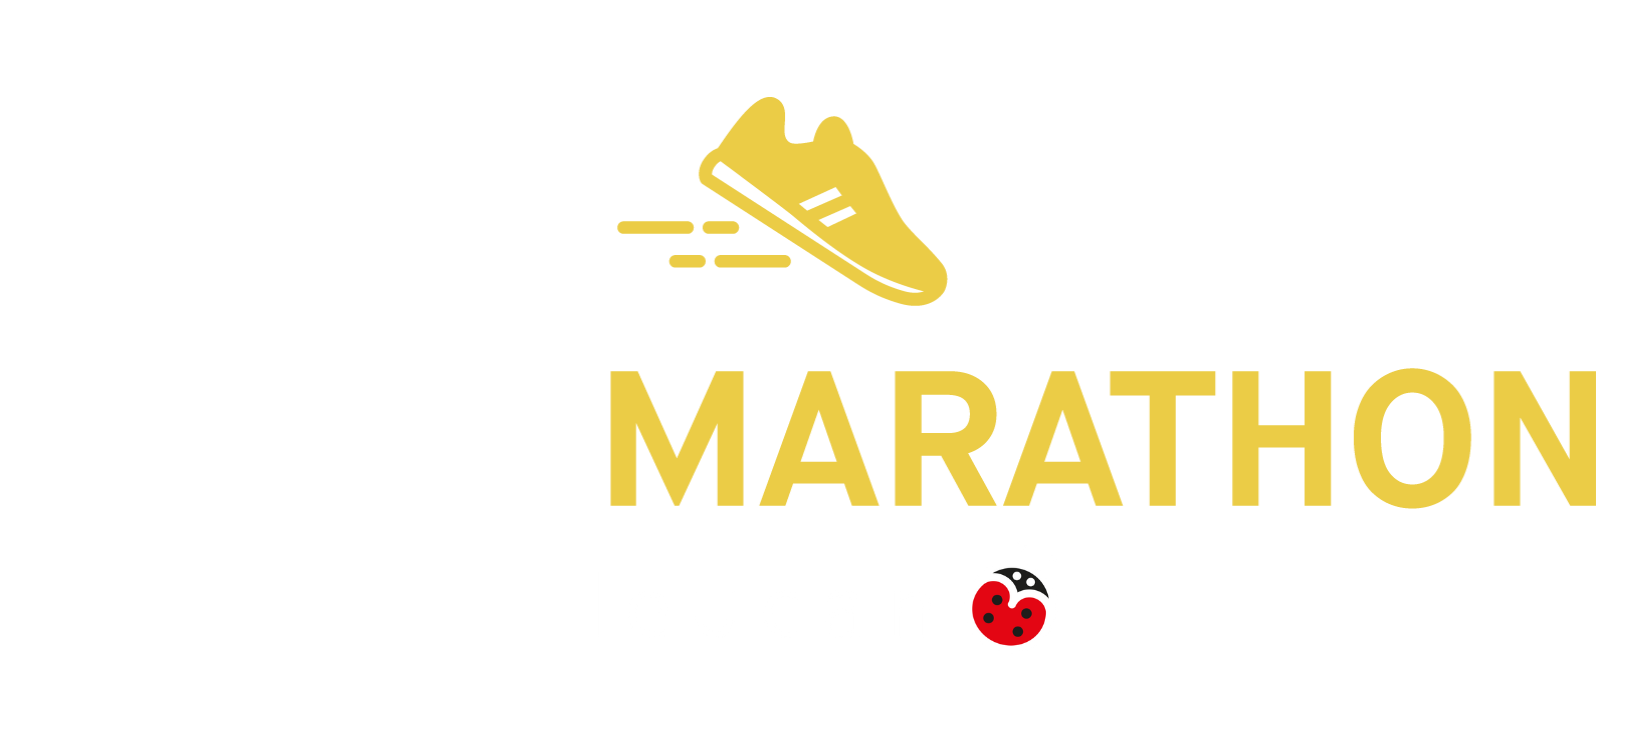 The Leucan Ultramarathon